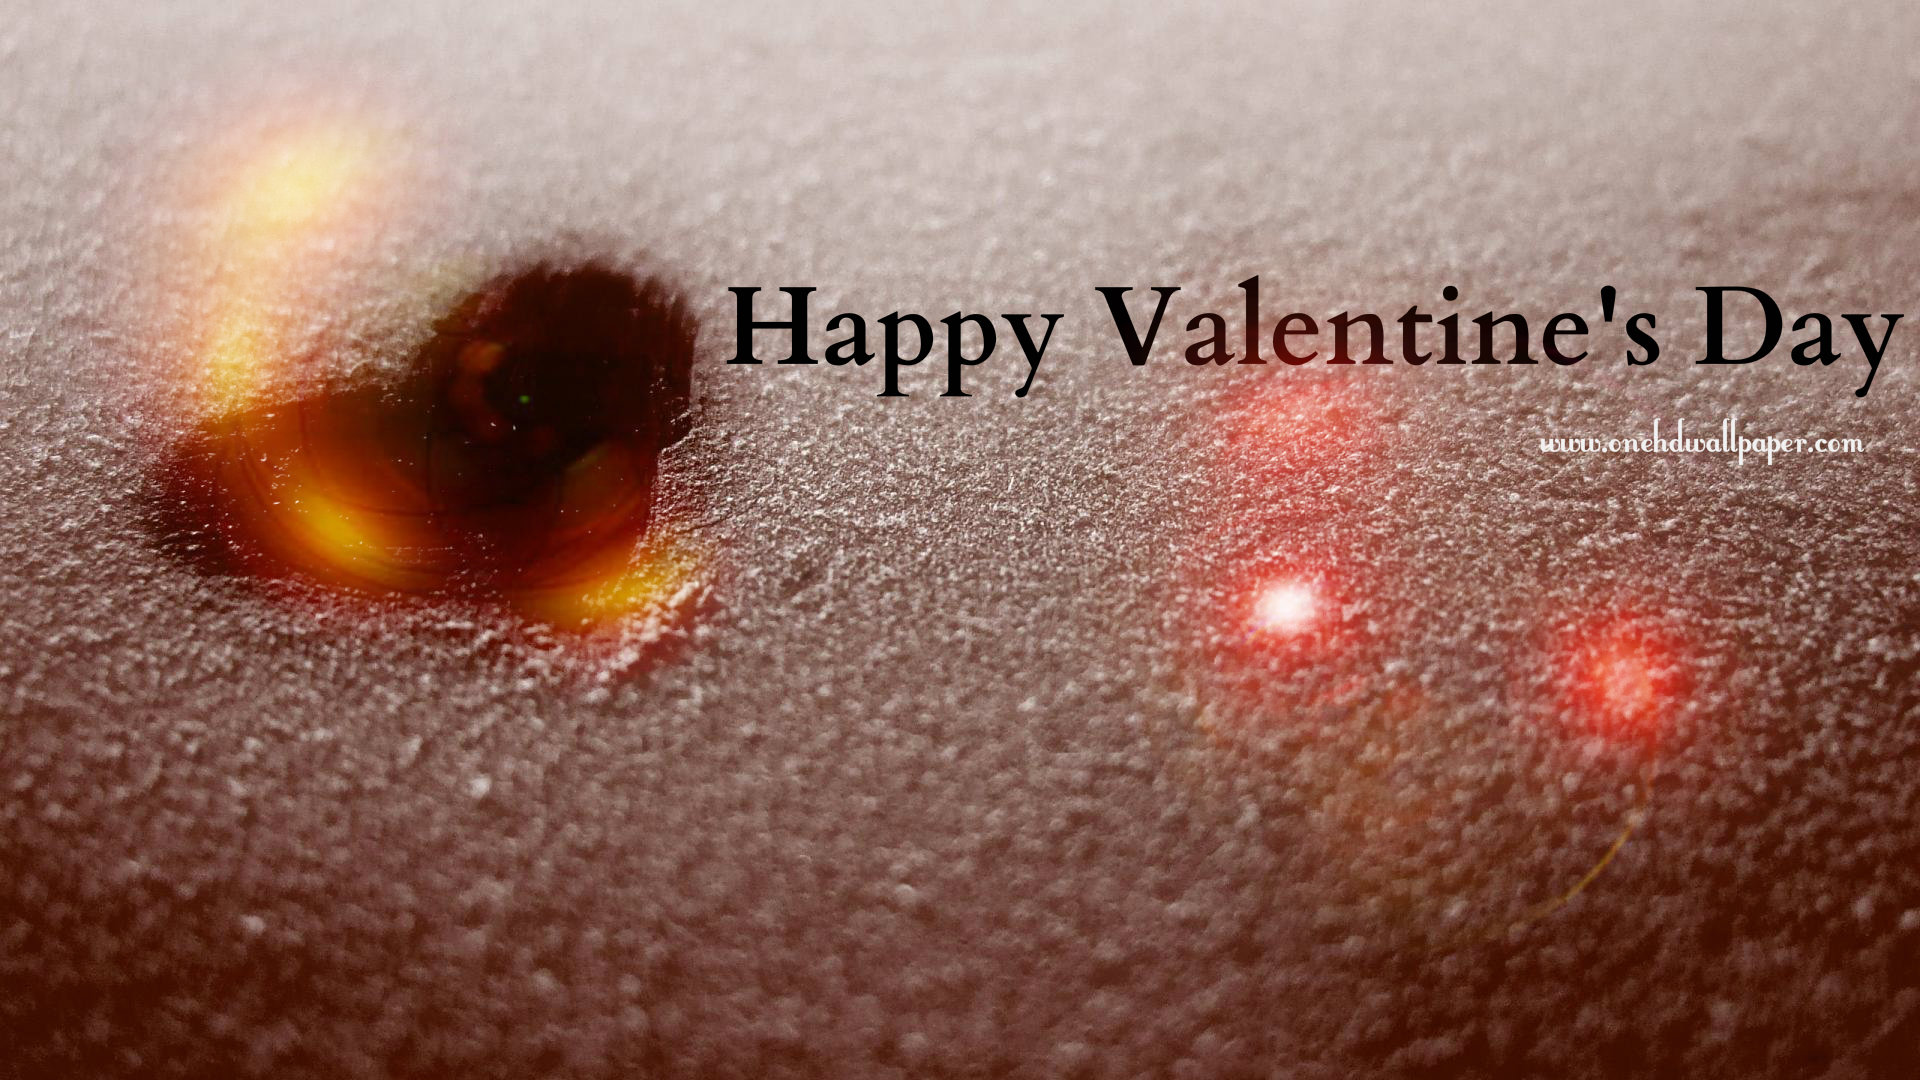 Happy Valentines Day Wallpaper HD Image Ten